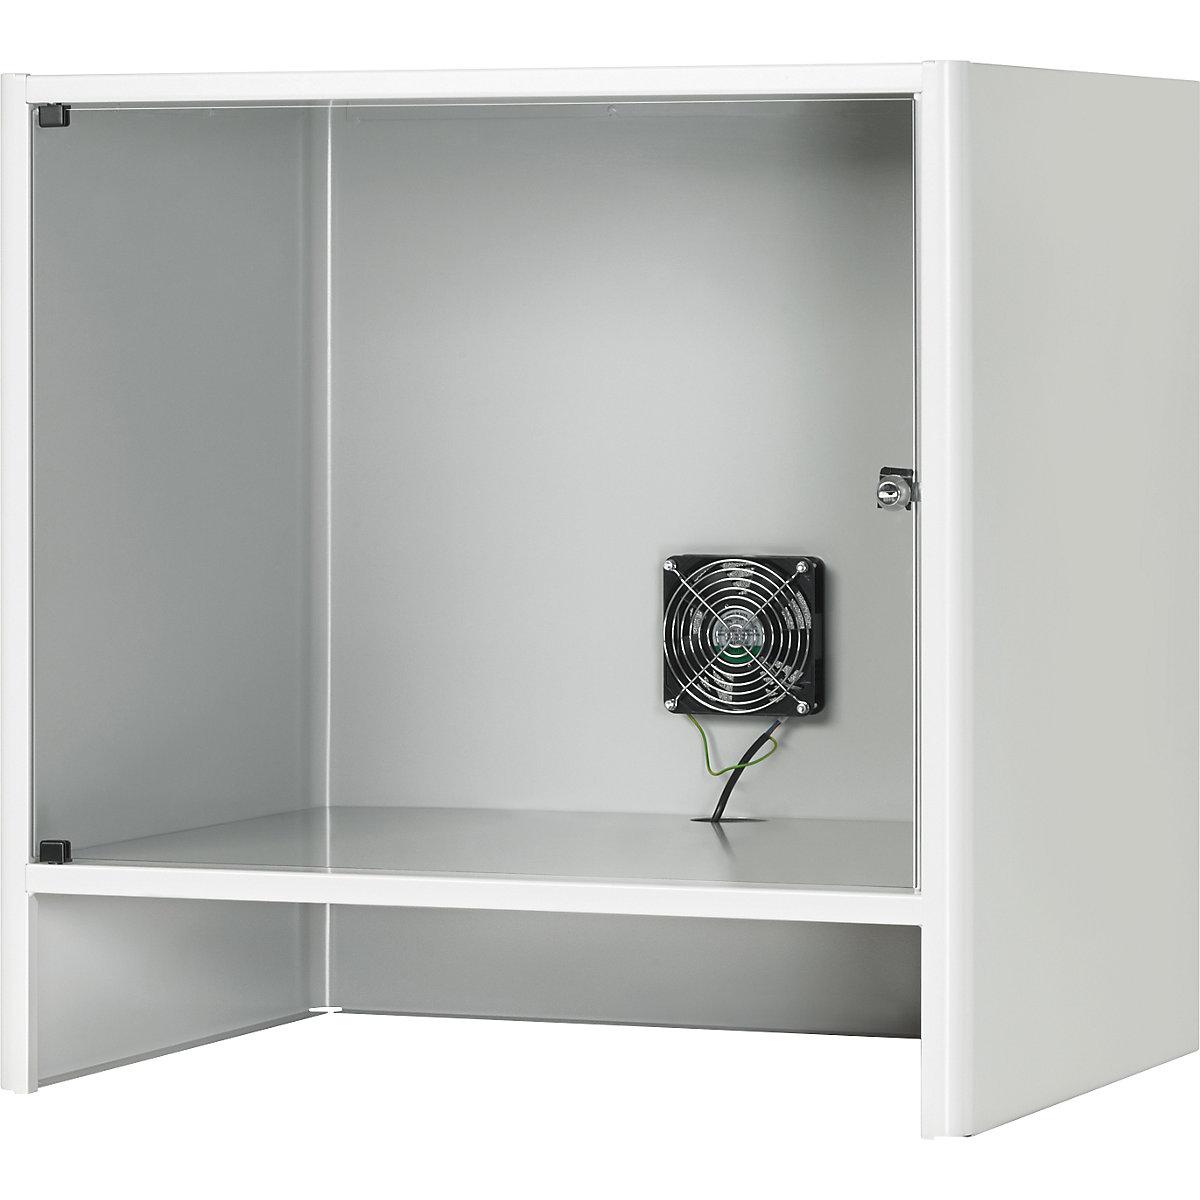 RAU – Monitor housing with integrated ventilation fan, HxWxD 710 x 720 x 550 mm, light grey RAL 7035